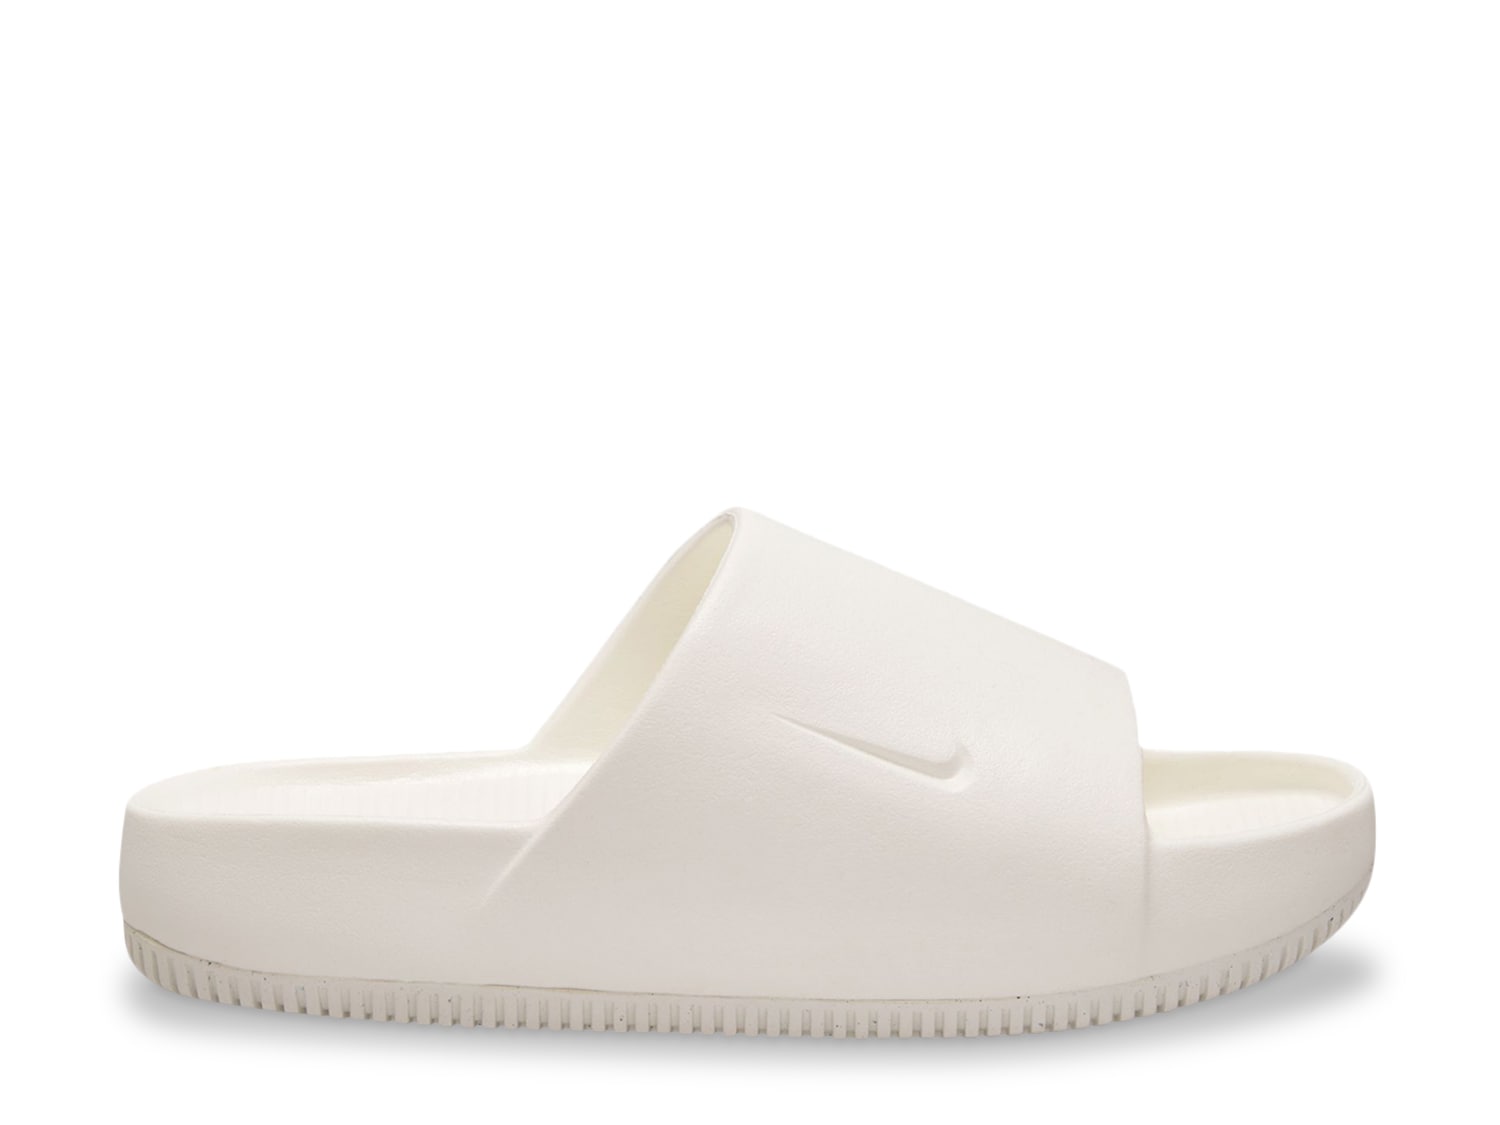 Nike Calm Slide Sandal - Women's - Free Shipping